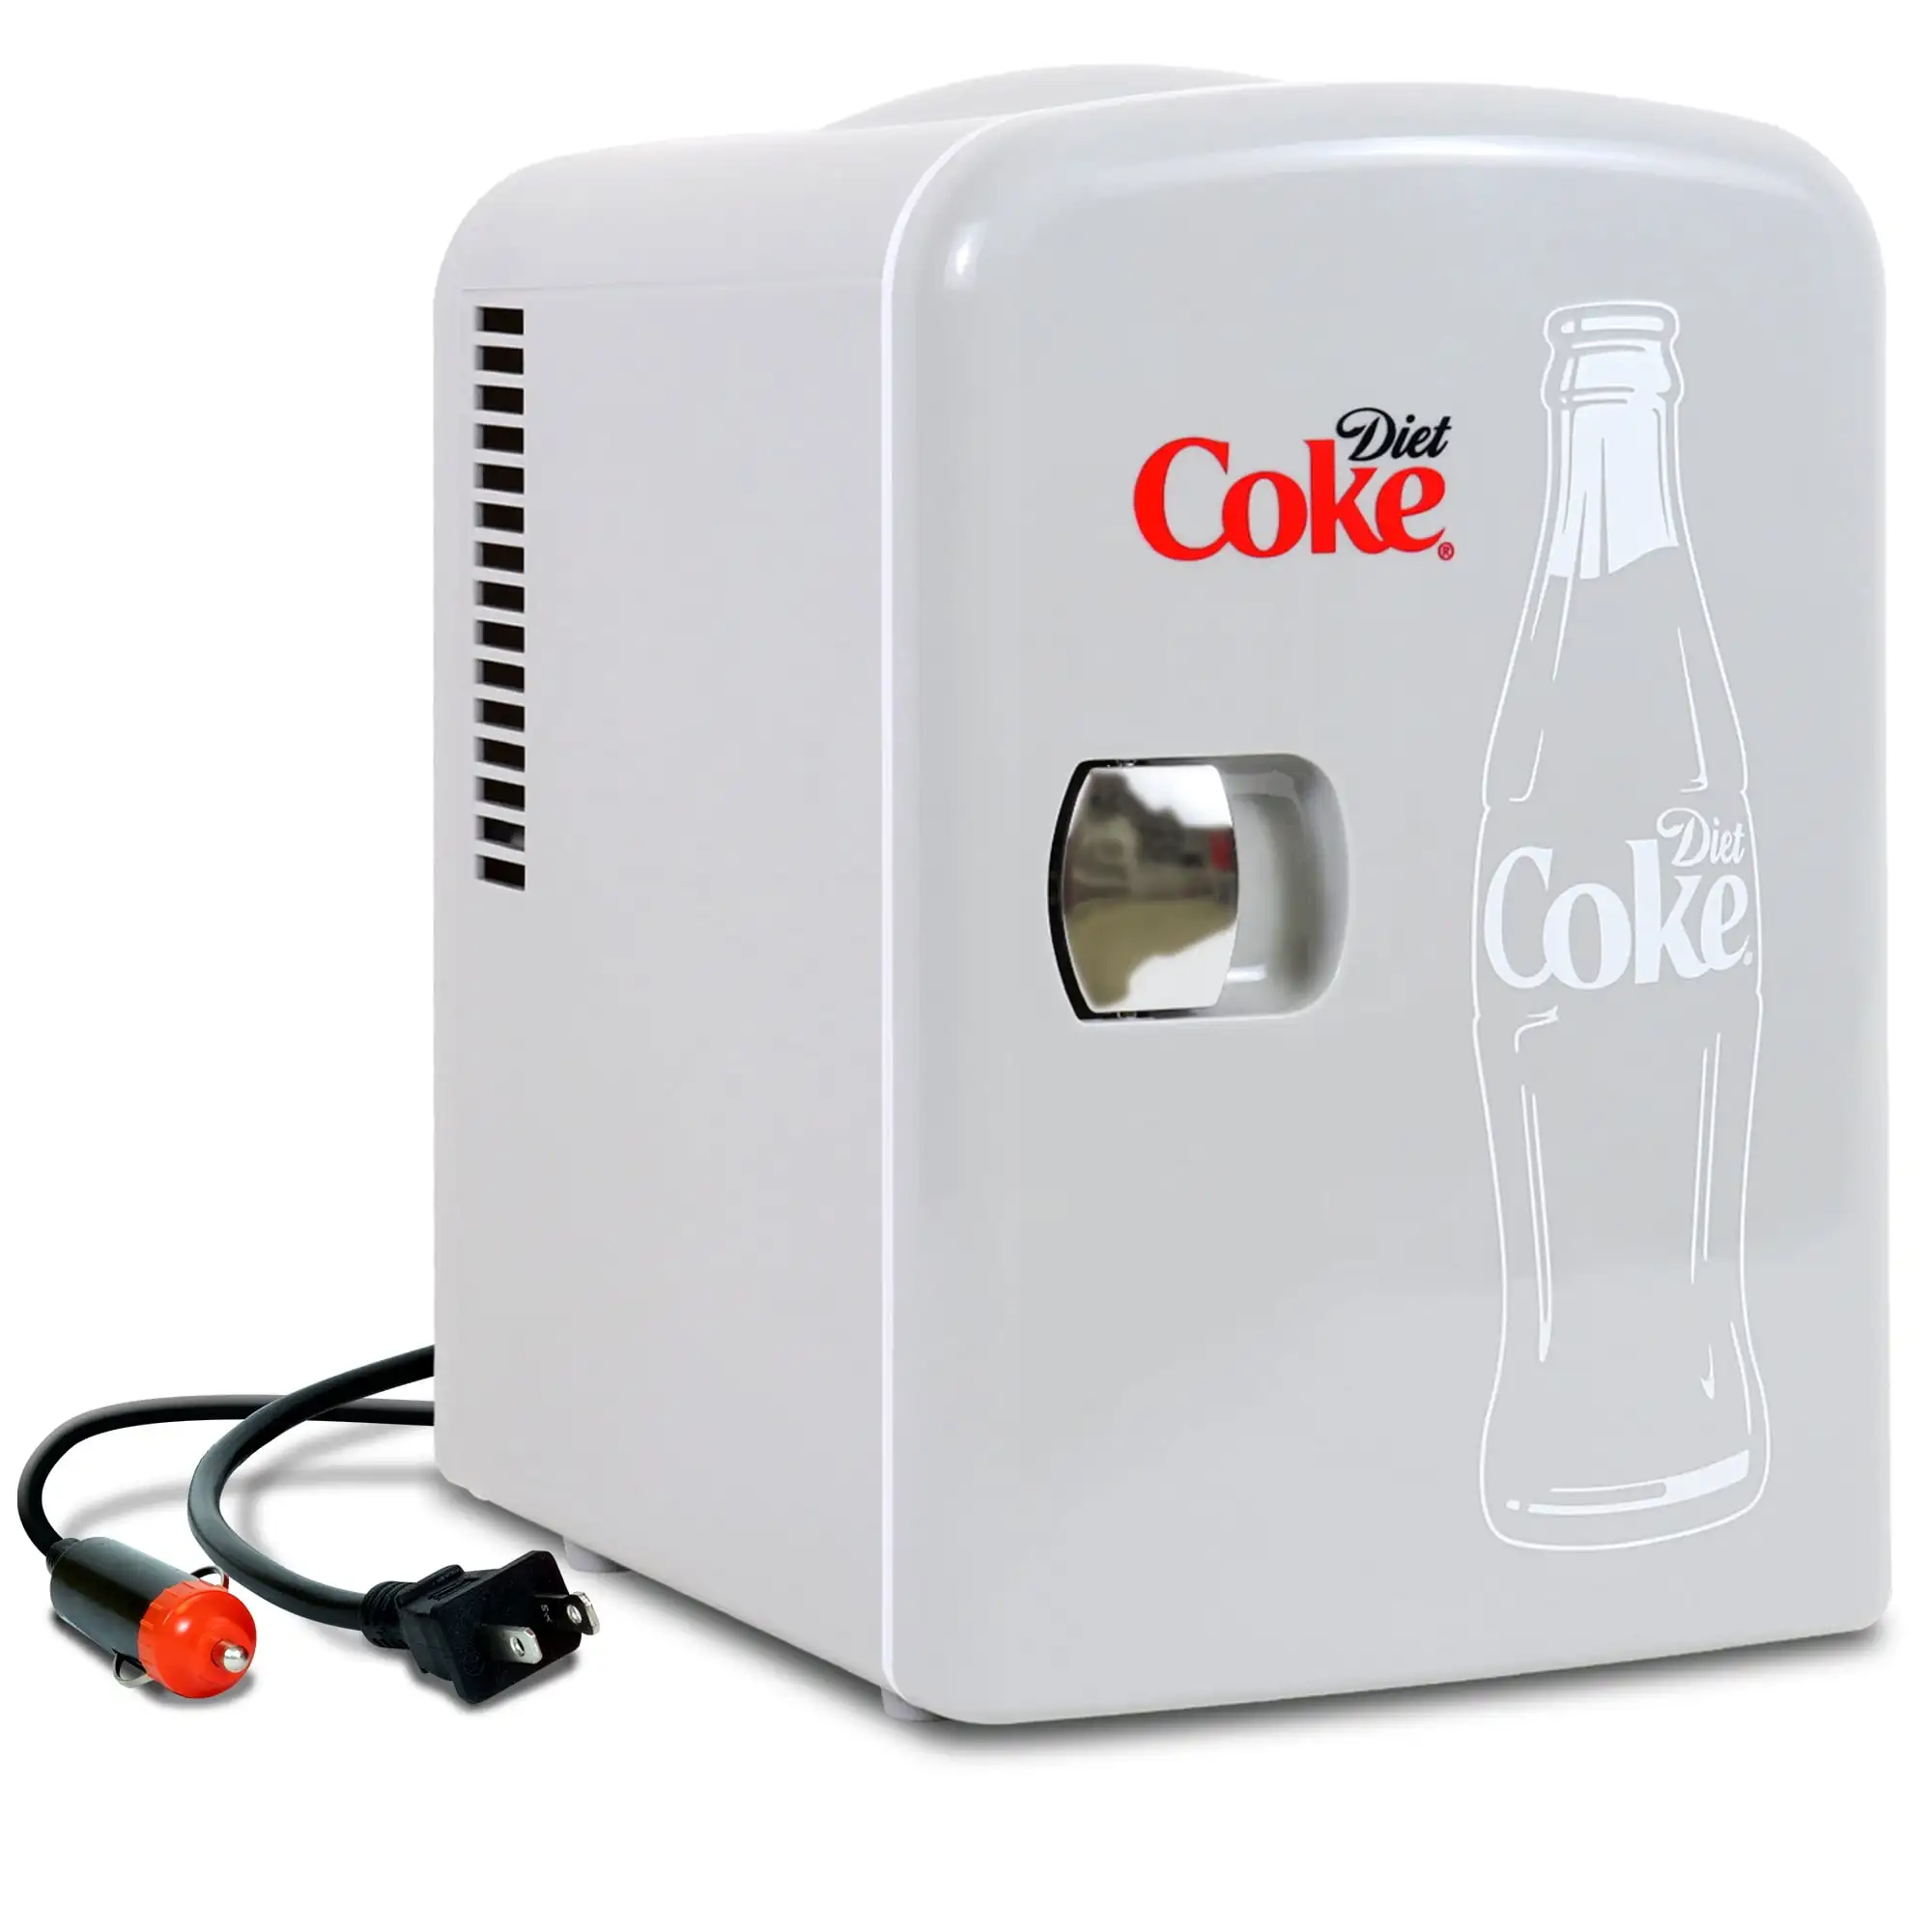 

Диетический Кокс 6 банок, мини-холодильник, портативный мини-холодильник 4 л, компактный дорожный холодильник